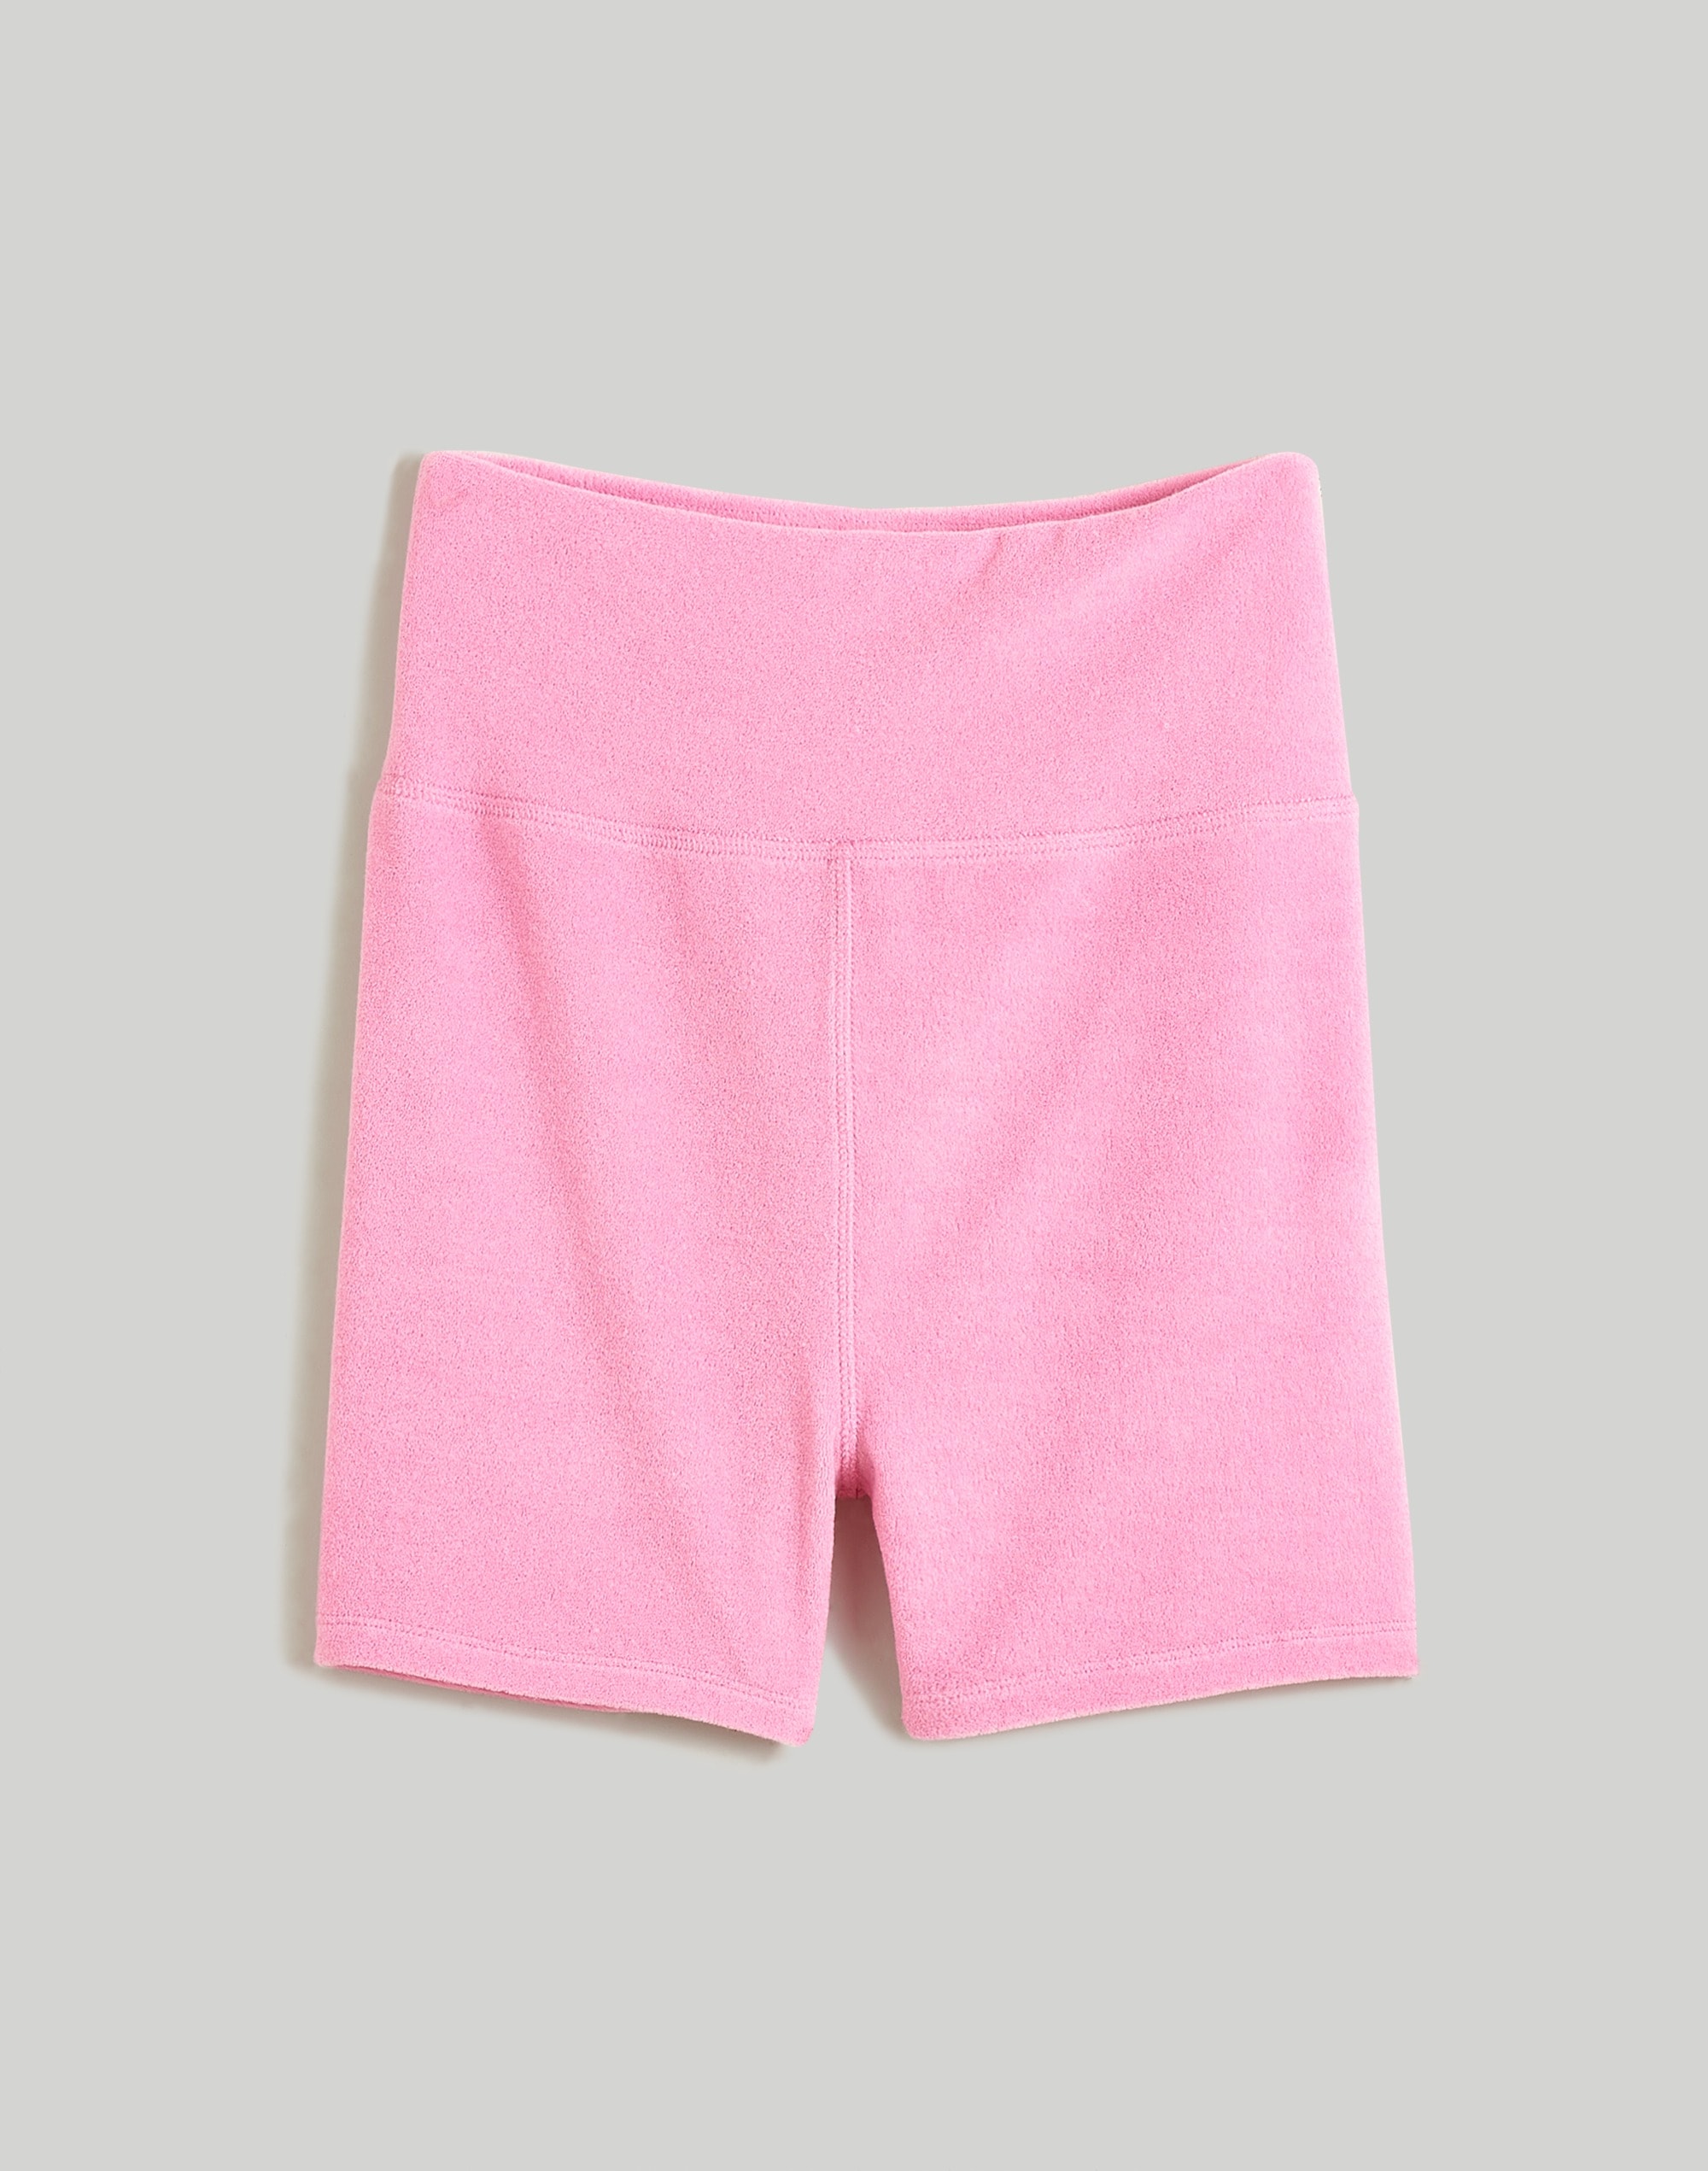 Towel Terry Biker Shorts